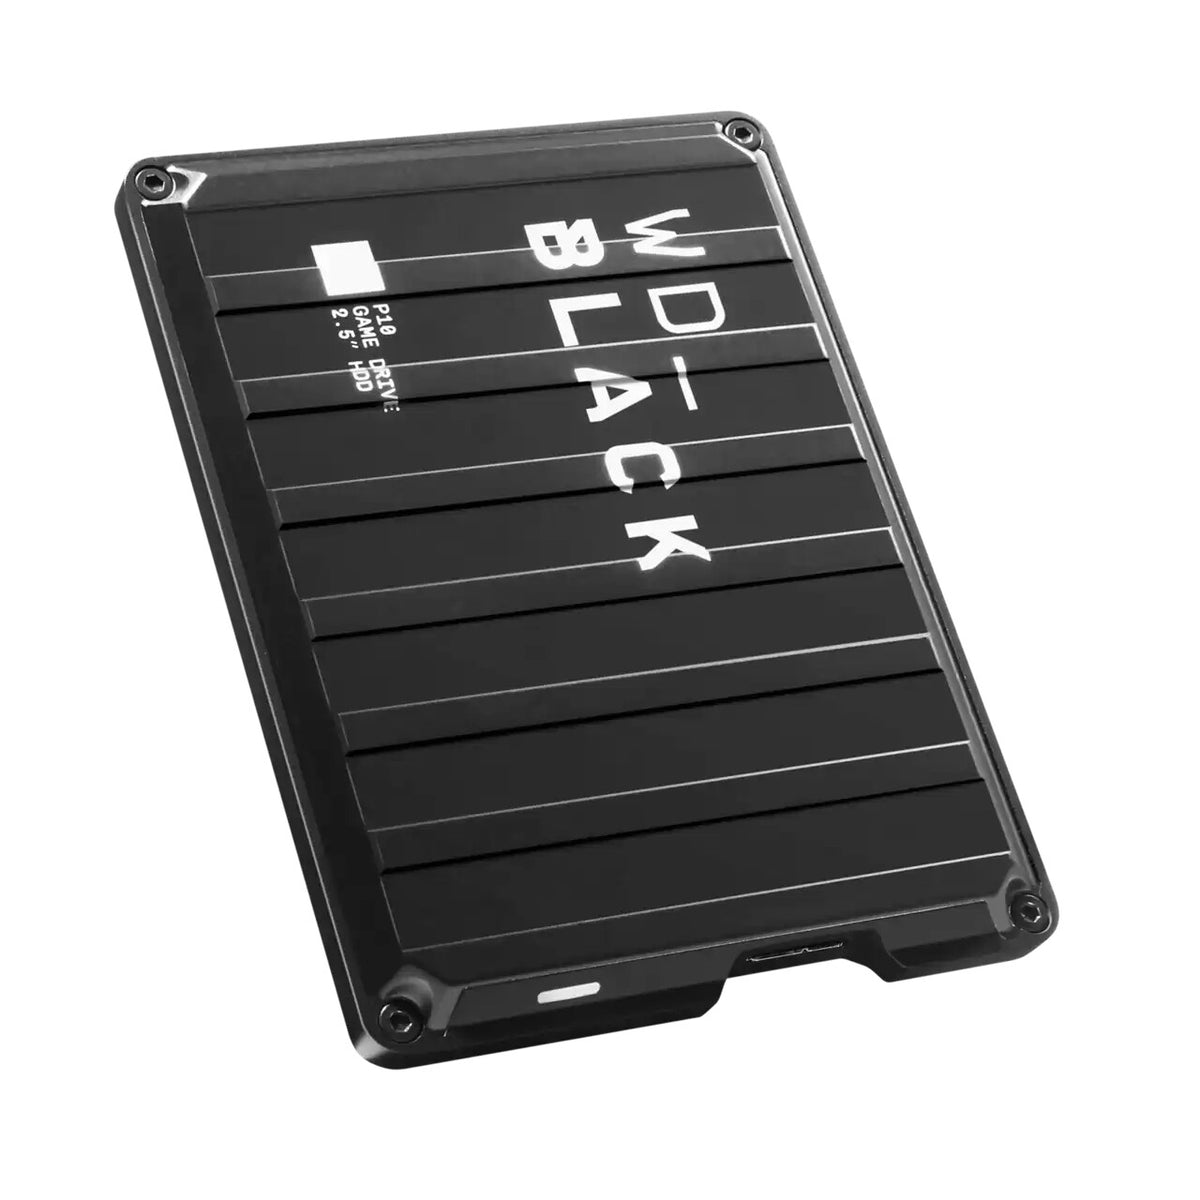 Western Digital WD_BLACK P10 Game Drive - External Hard Drive in Black - 2 TB